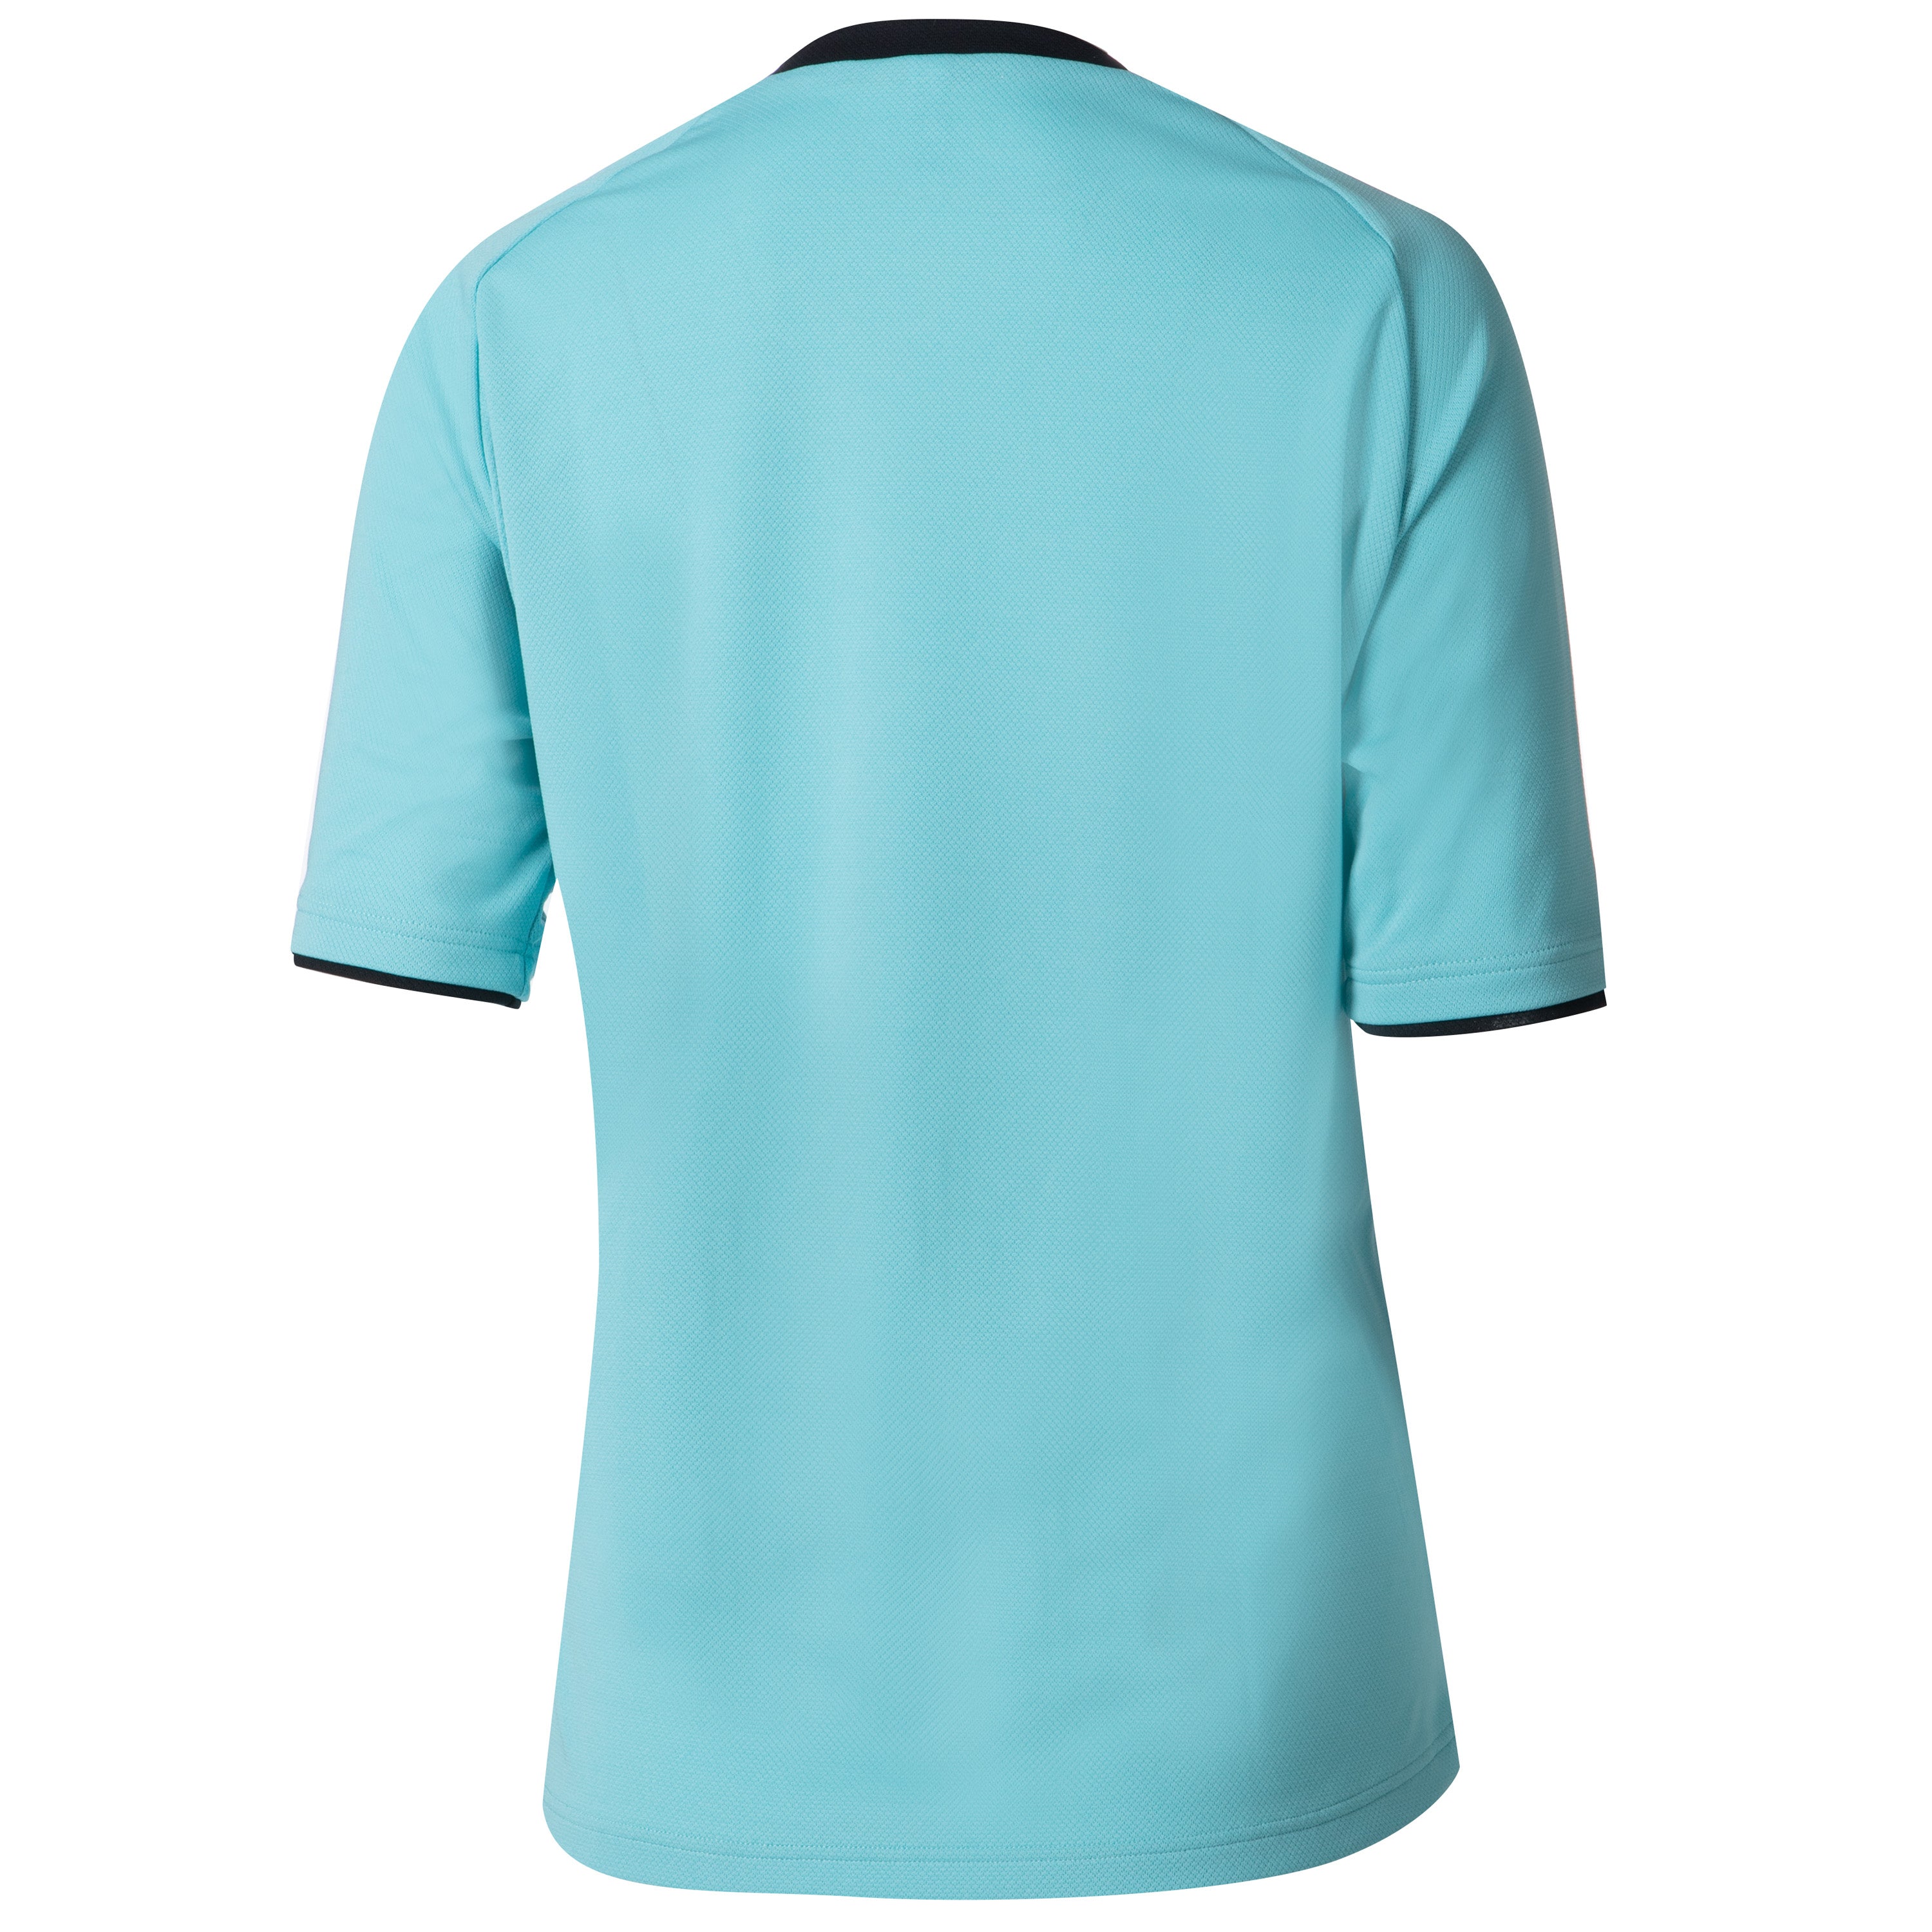 Jëuf Essential MTB Solid Women's Short Sleeve Jersey - Aqua